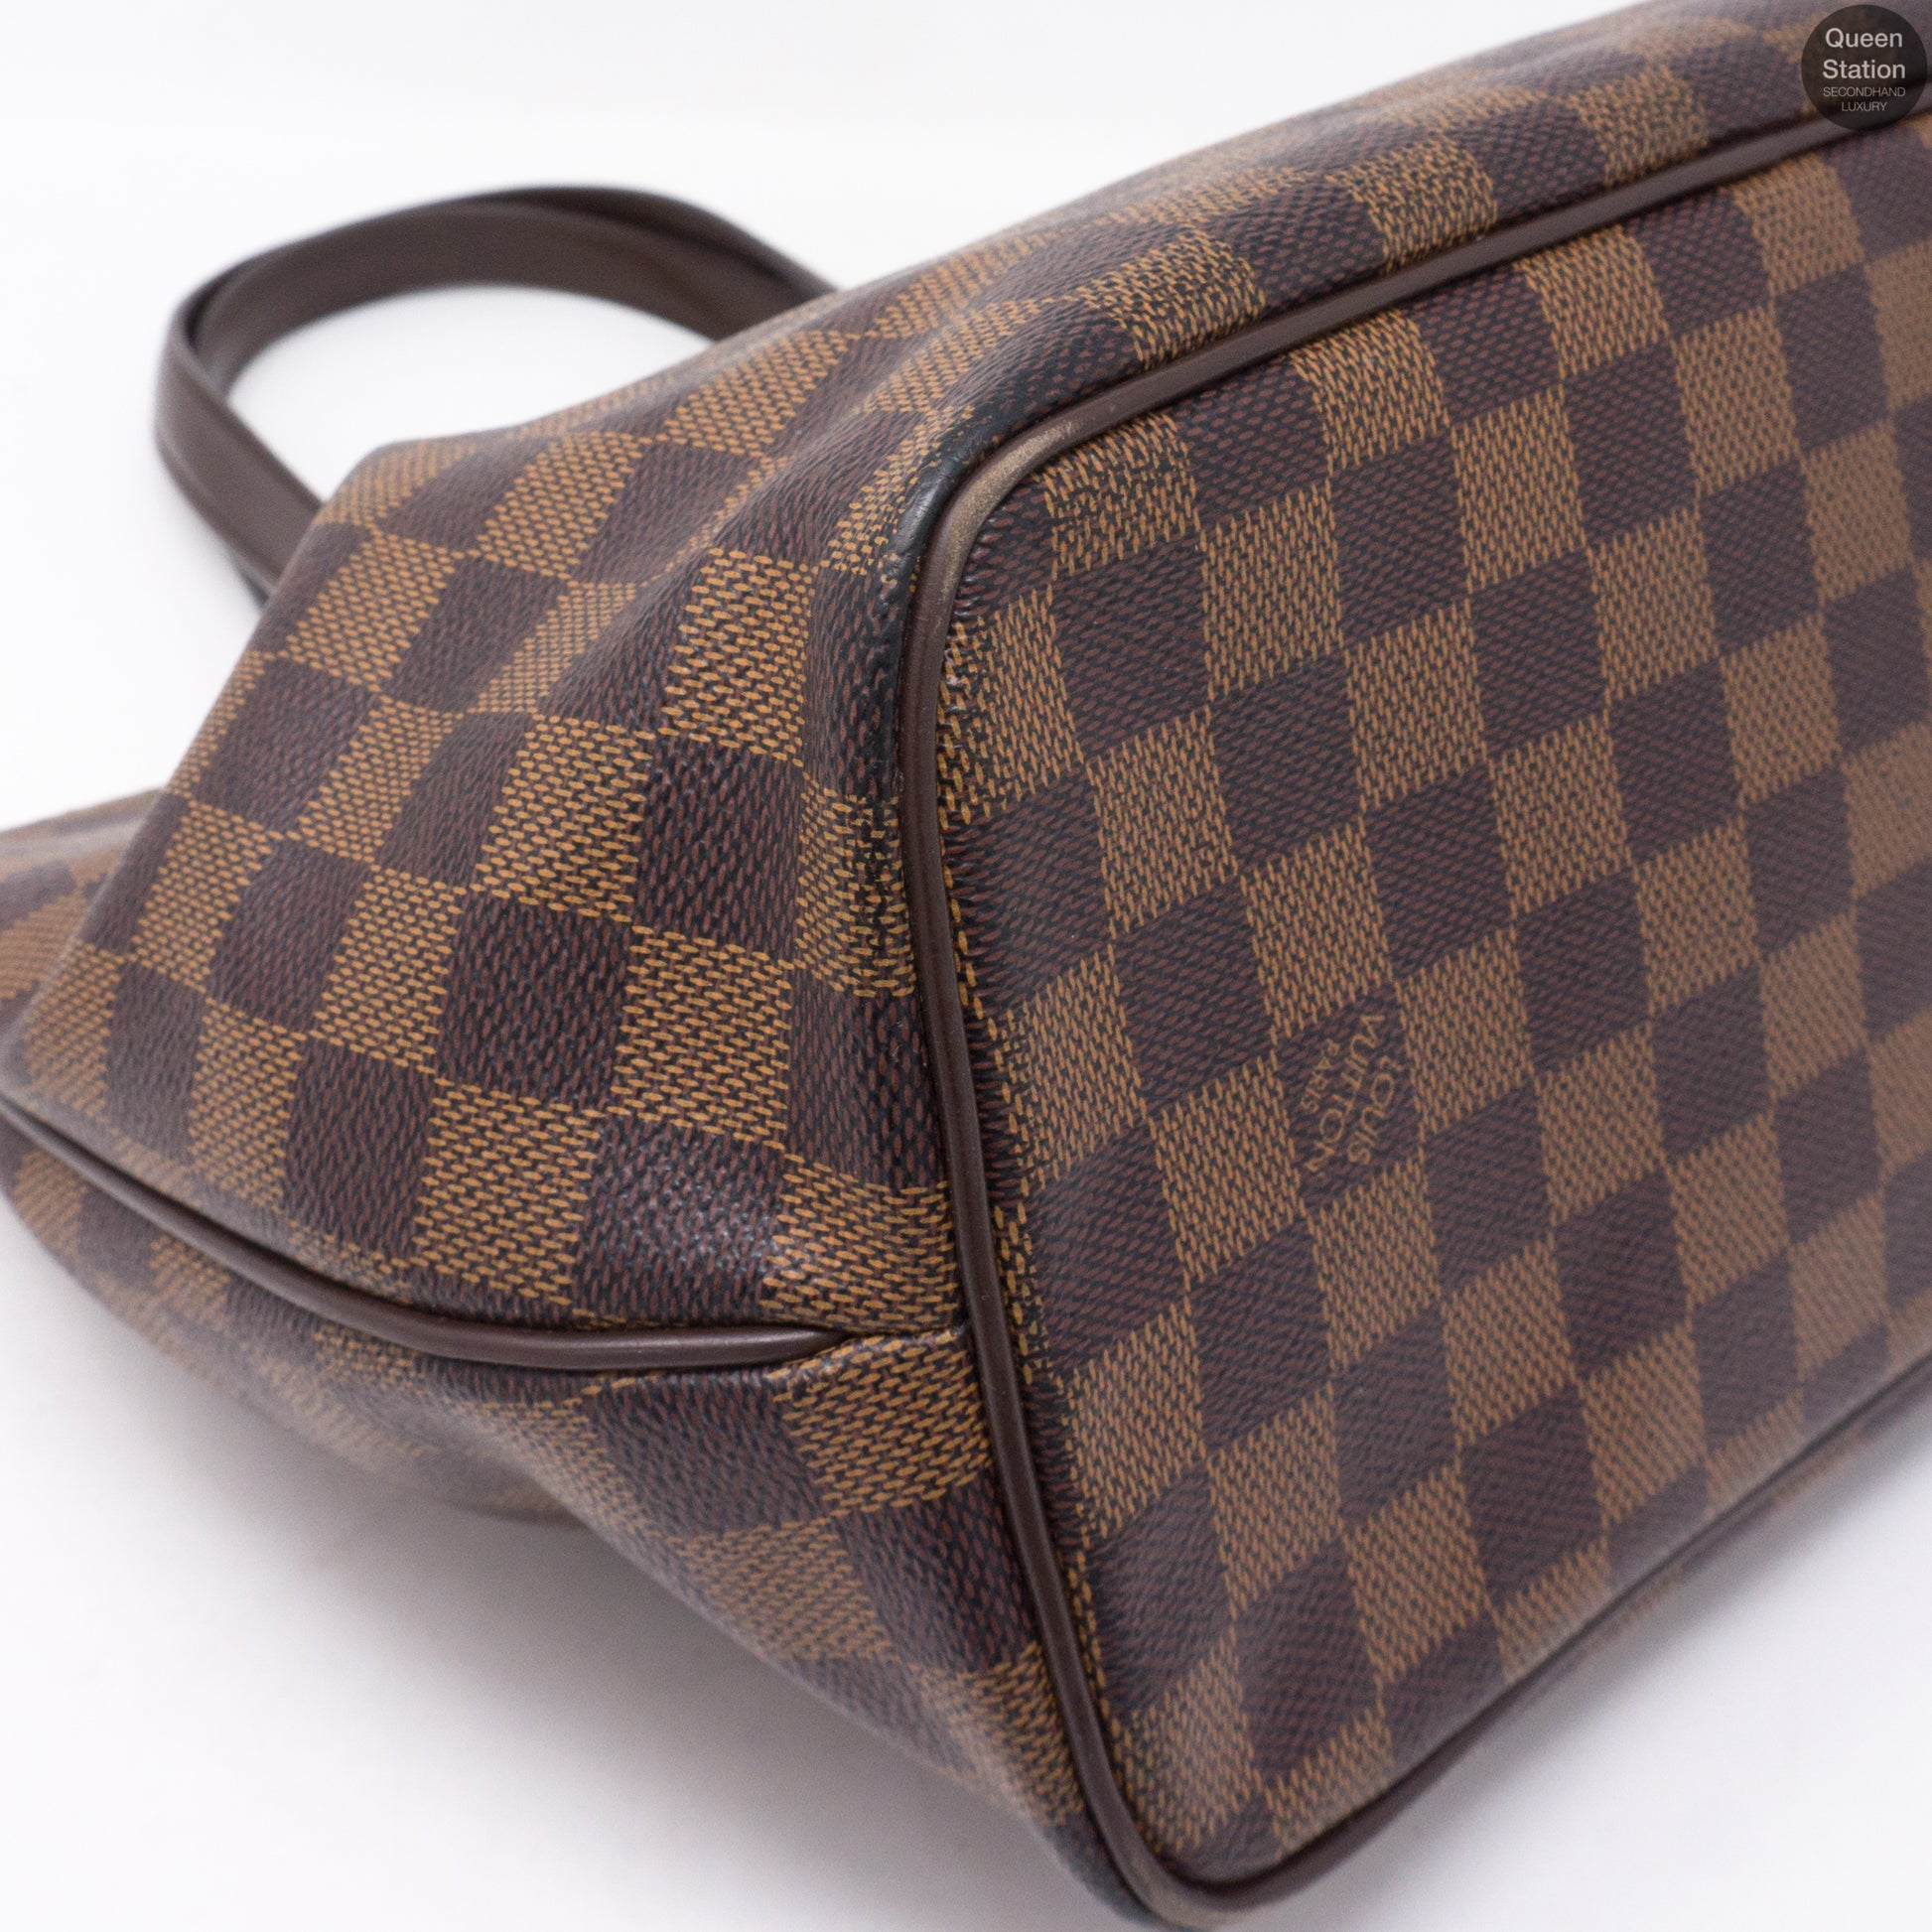 LV Westminster Damien handbag - great condition!